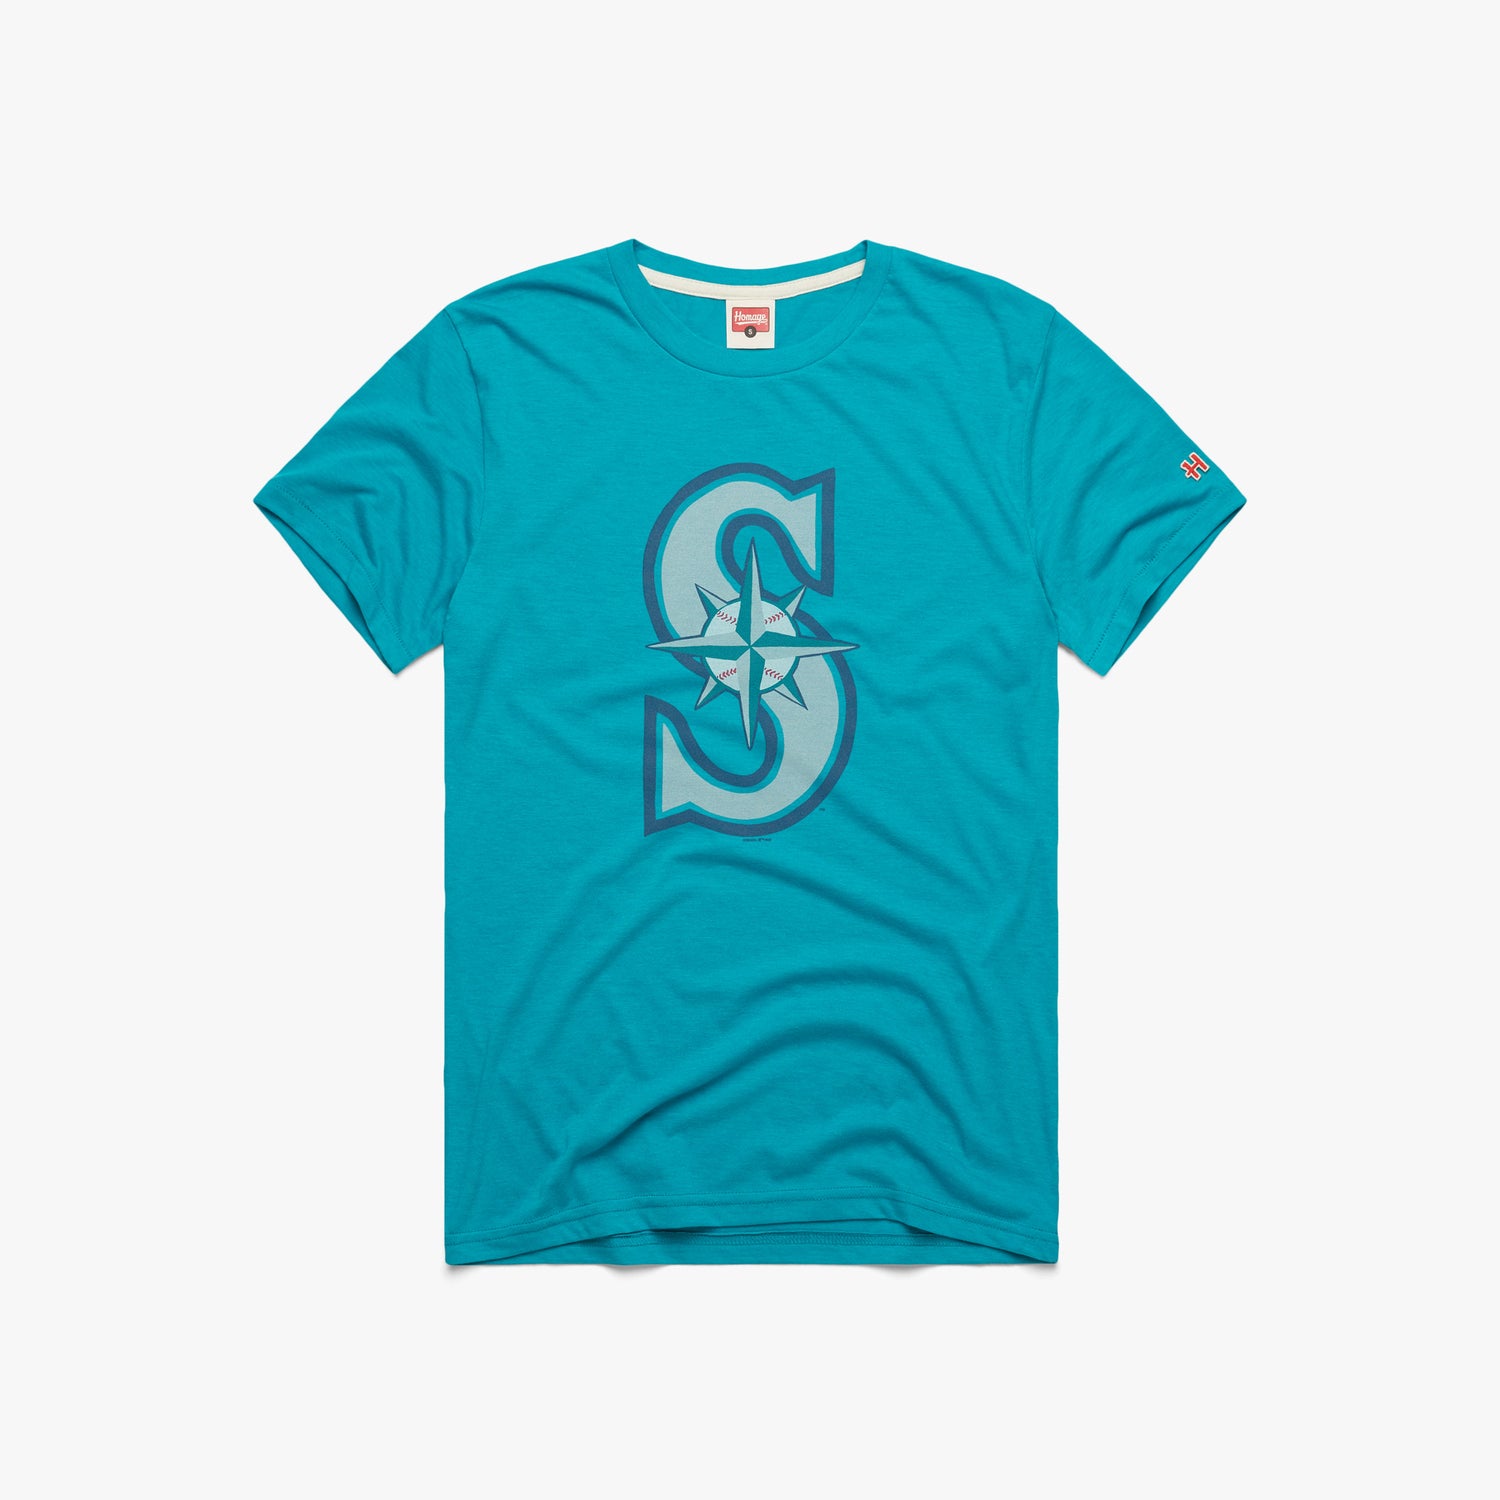 Men's Seattle Mariners Homage Gray Diamond Tri-Blend T-Shirt